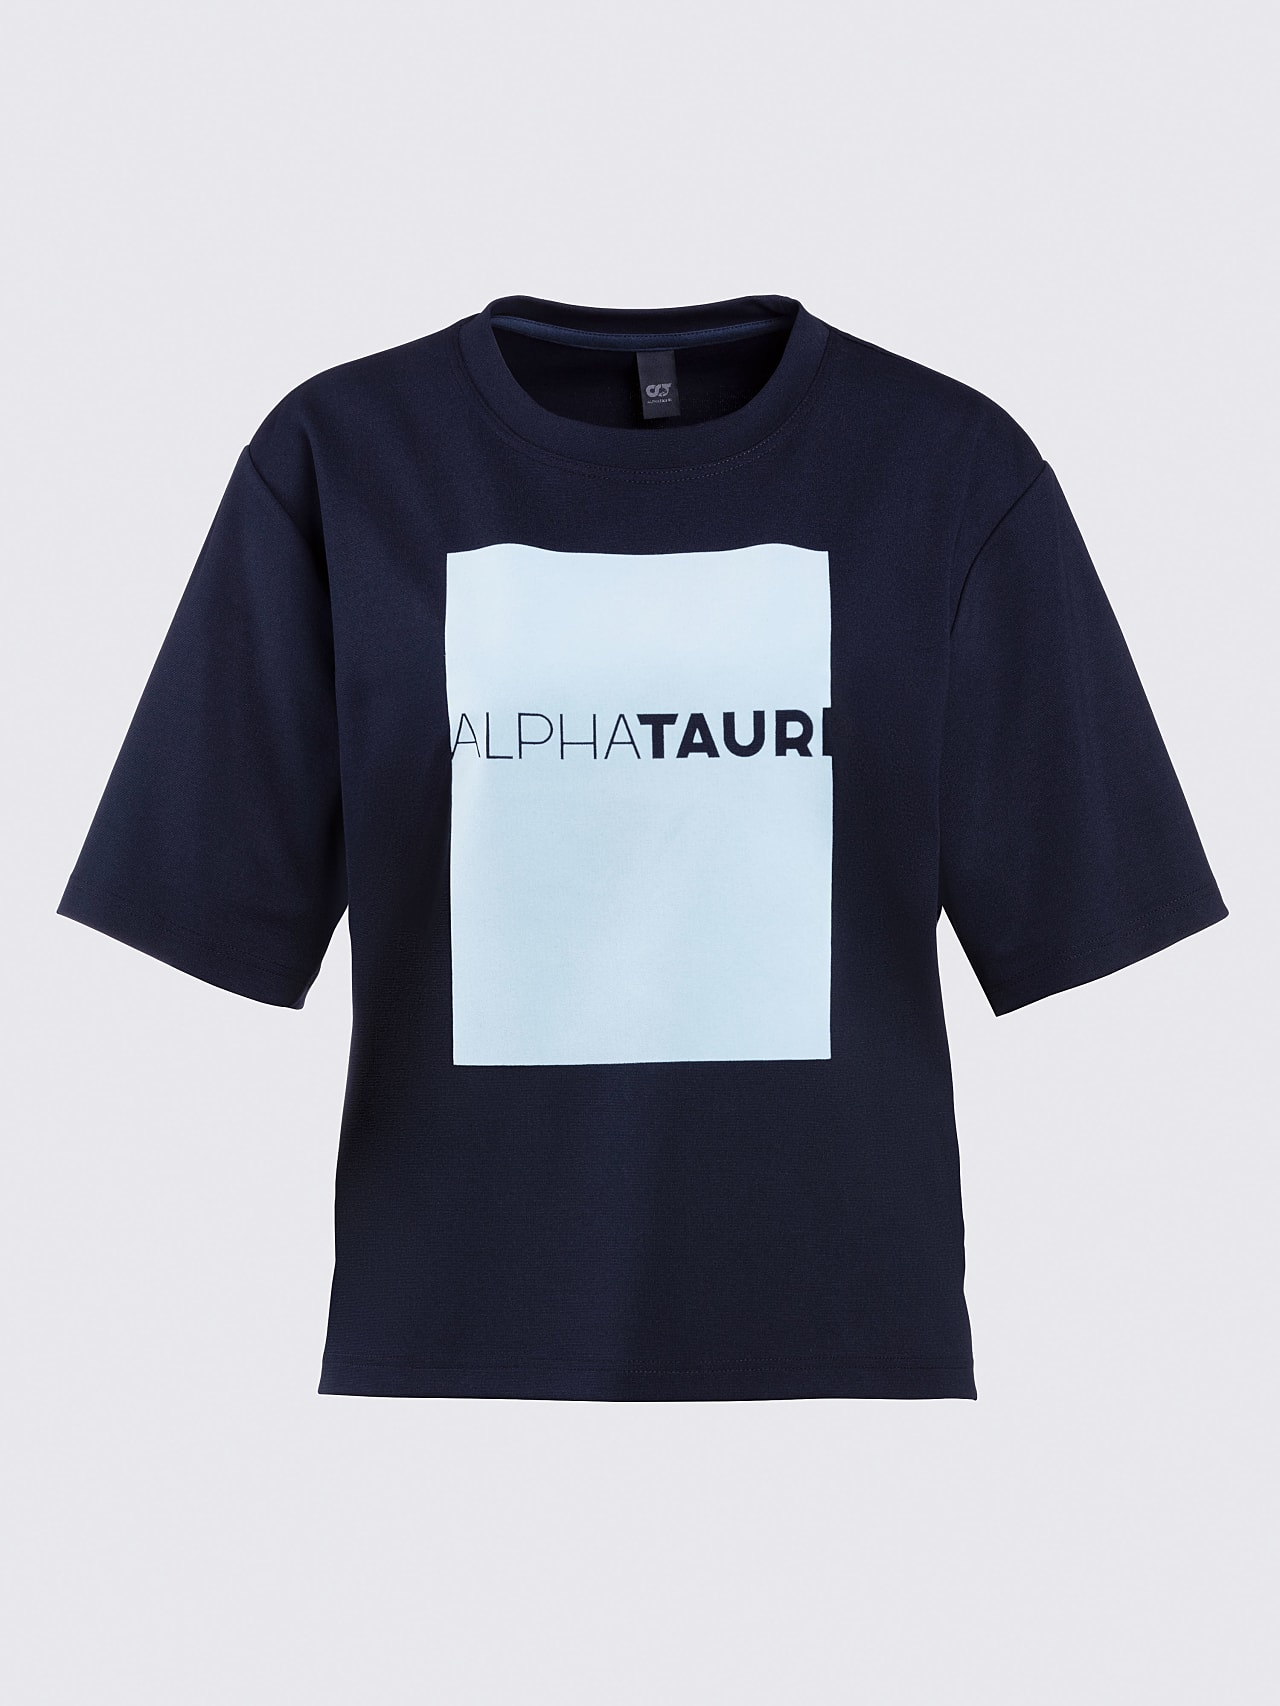 AlphaTauri | JASHU V1.Y5.02 | Heavy-Weight Logo T-Shirt in navy / blue for Women